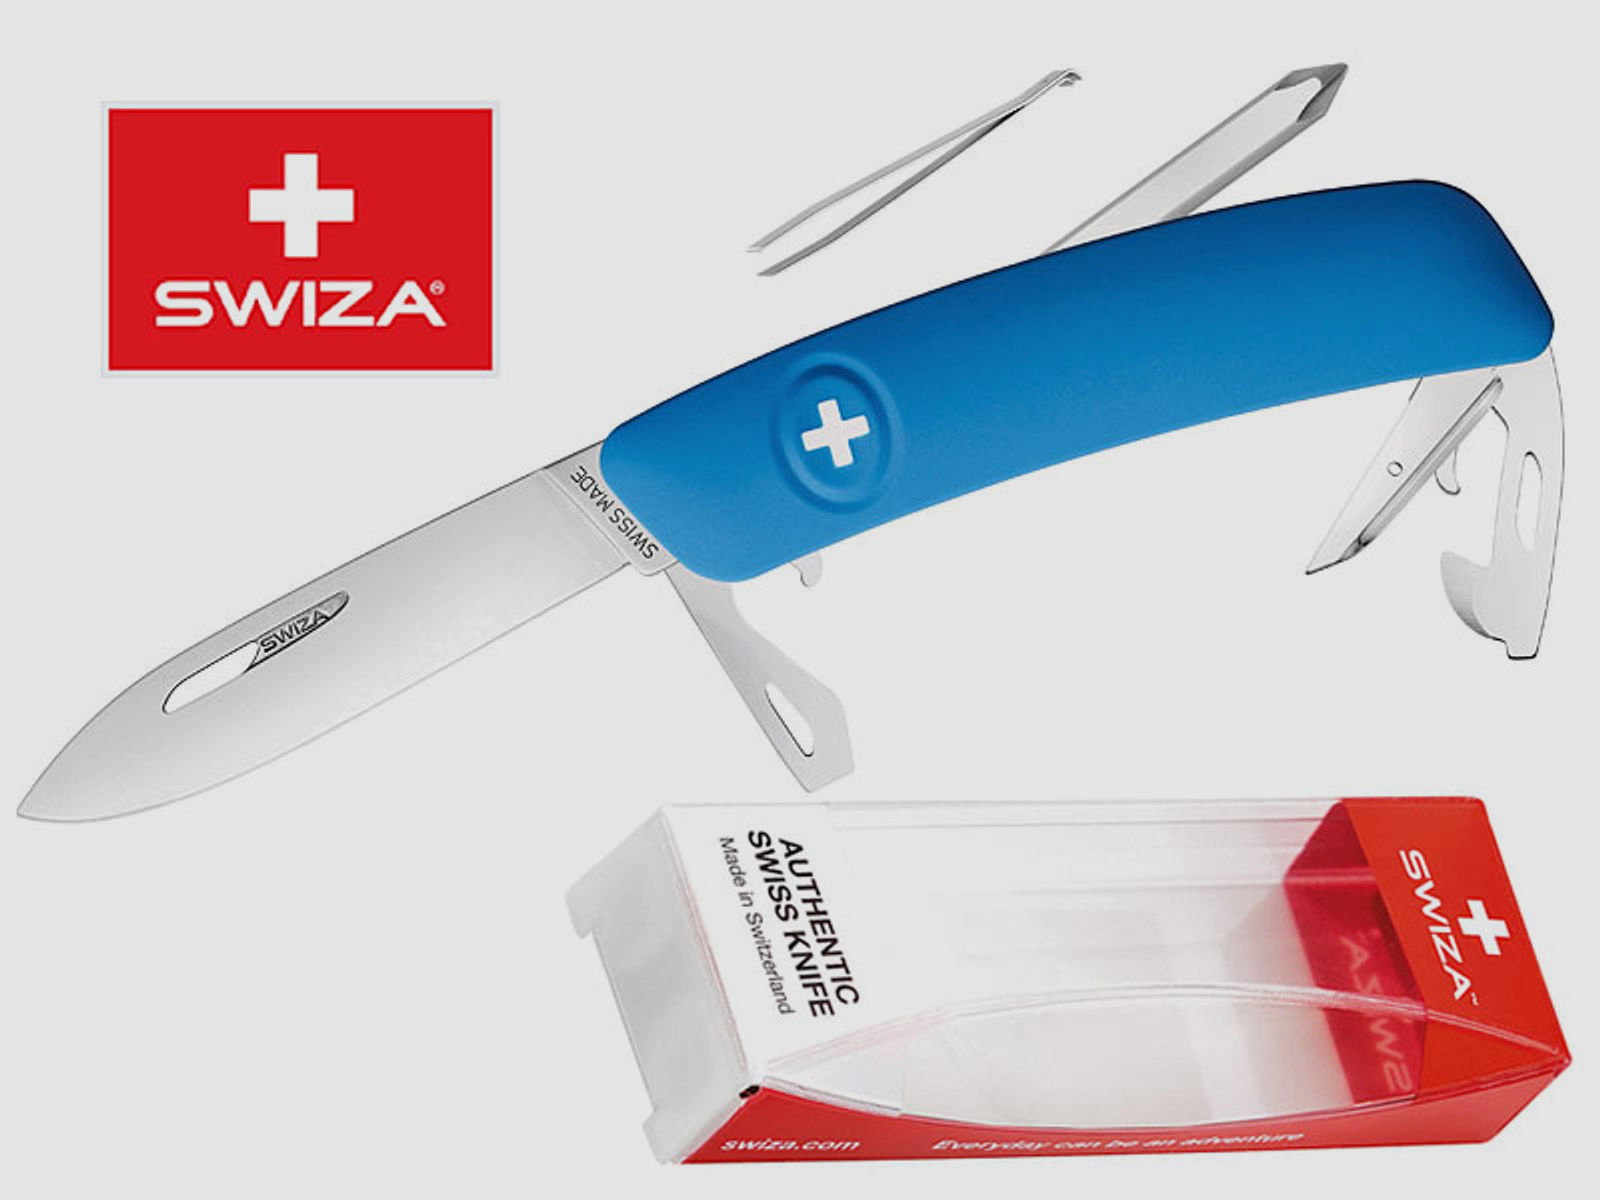 SWIZA Schweizer Messer D04, blau, Edelstahl 440, 11 Funktionen, Kreuzschlitzdreher, Multi-Tool